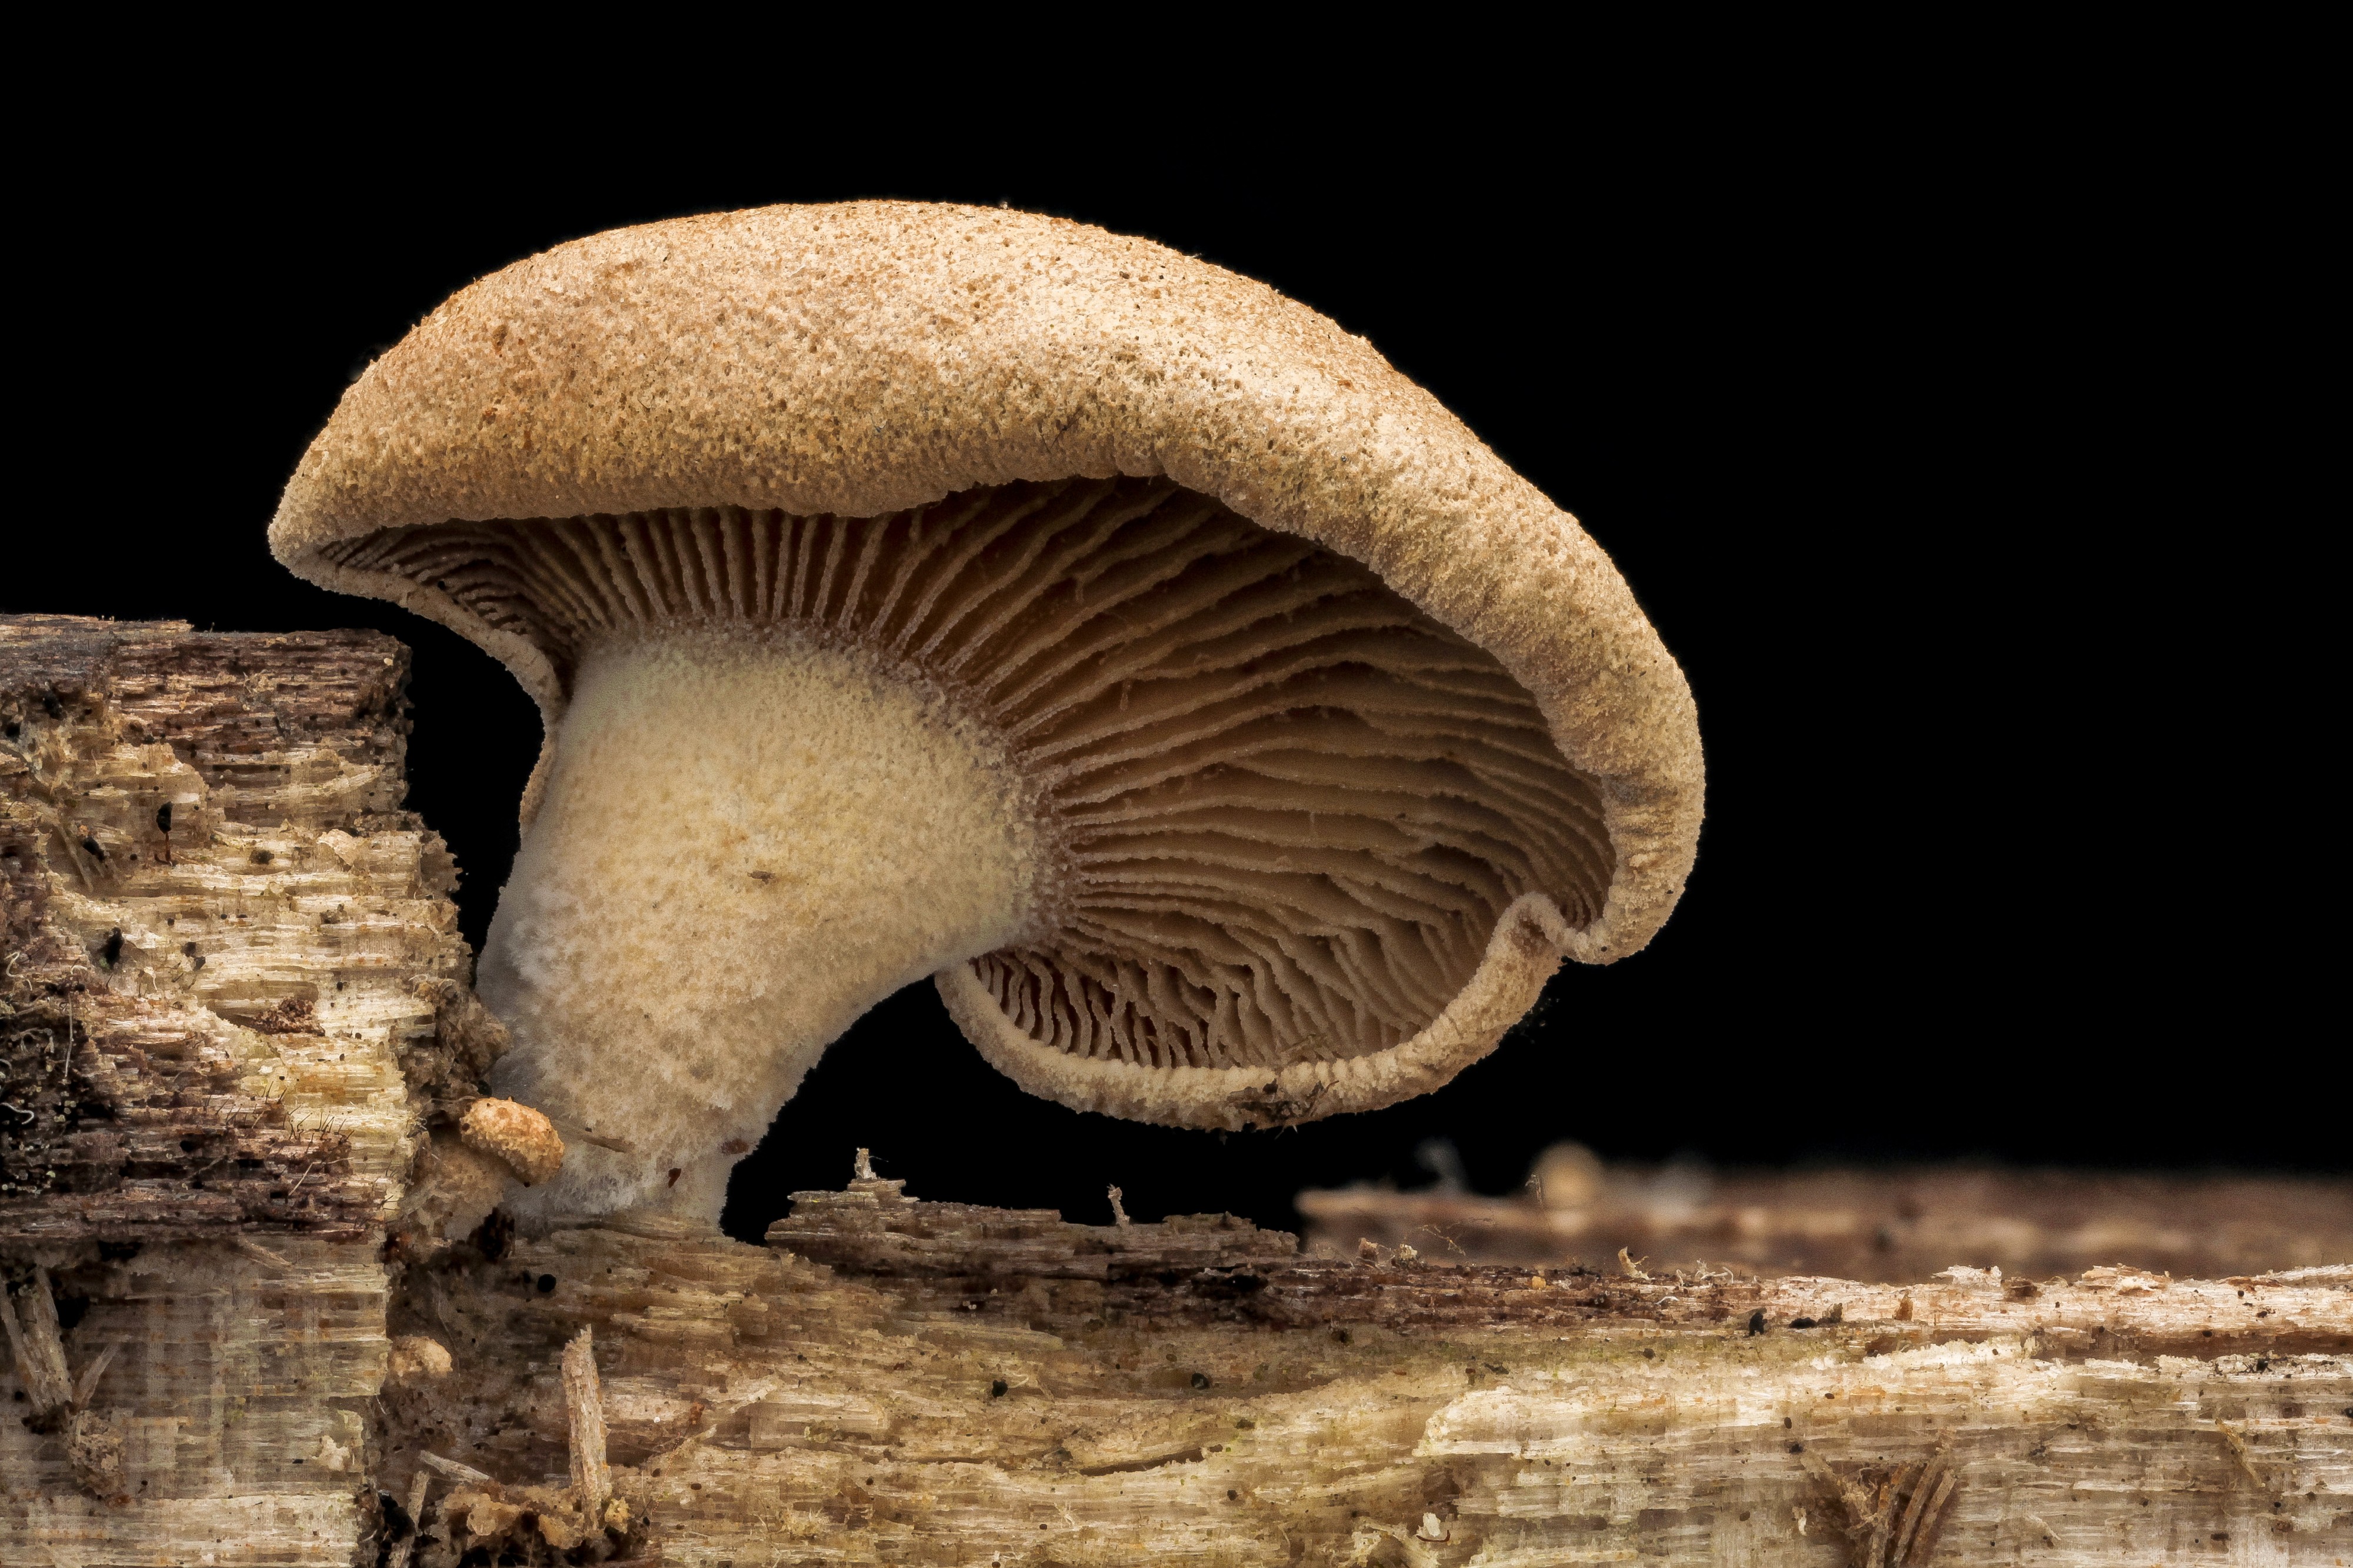 Mushroom, underneath 2012-09-21-14.51.00 ZS PMax (8016189217)